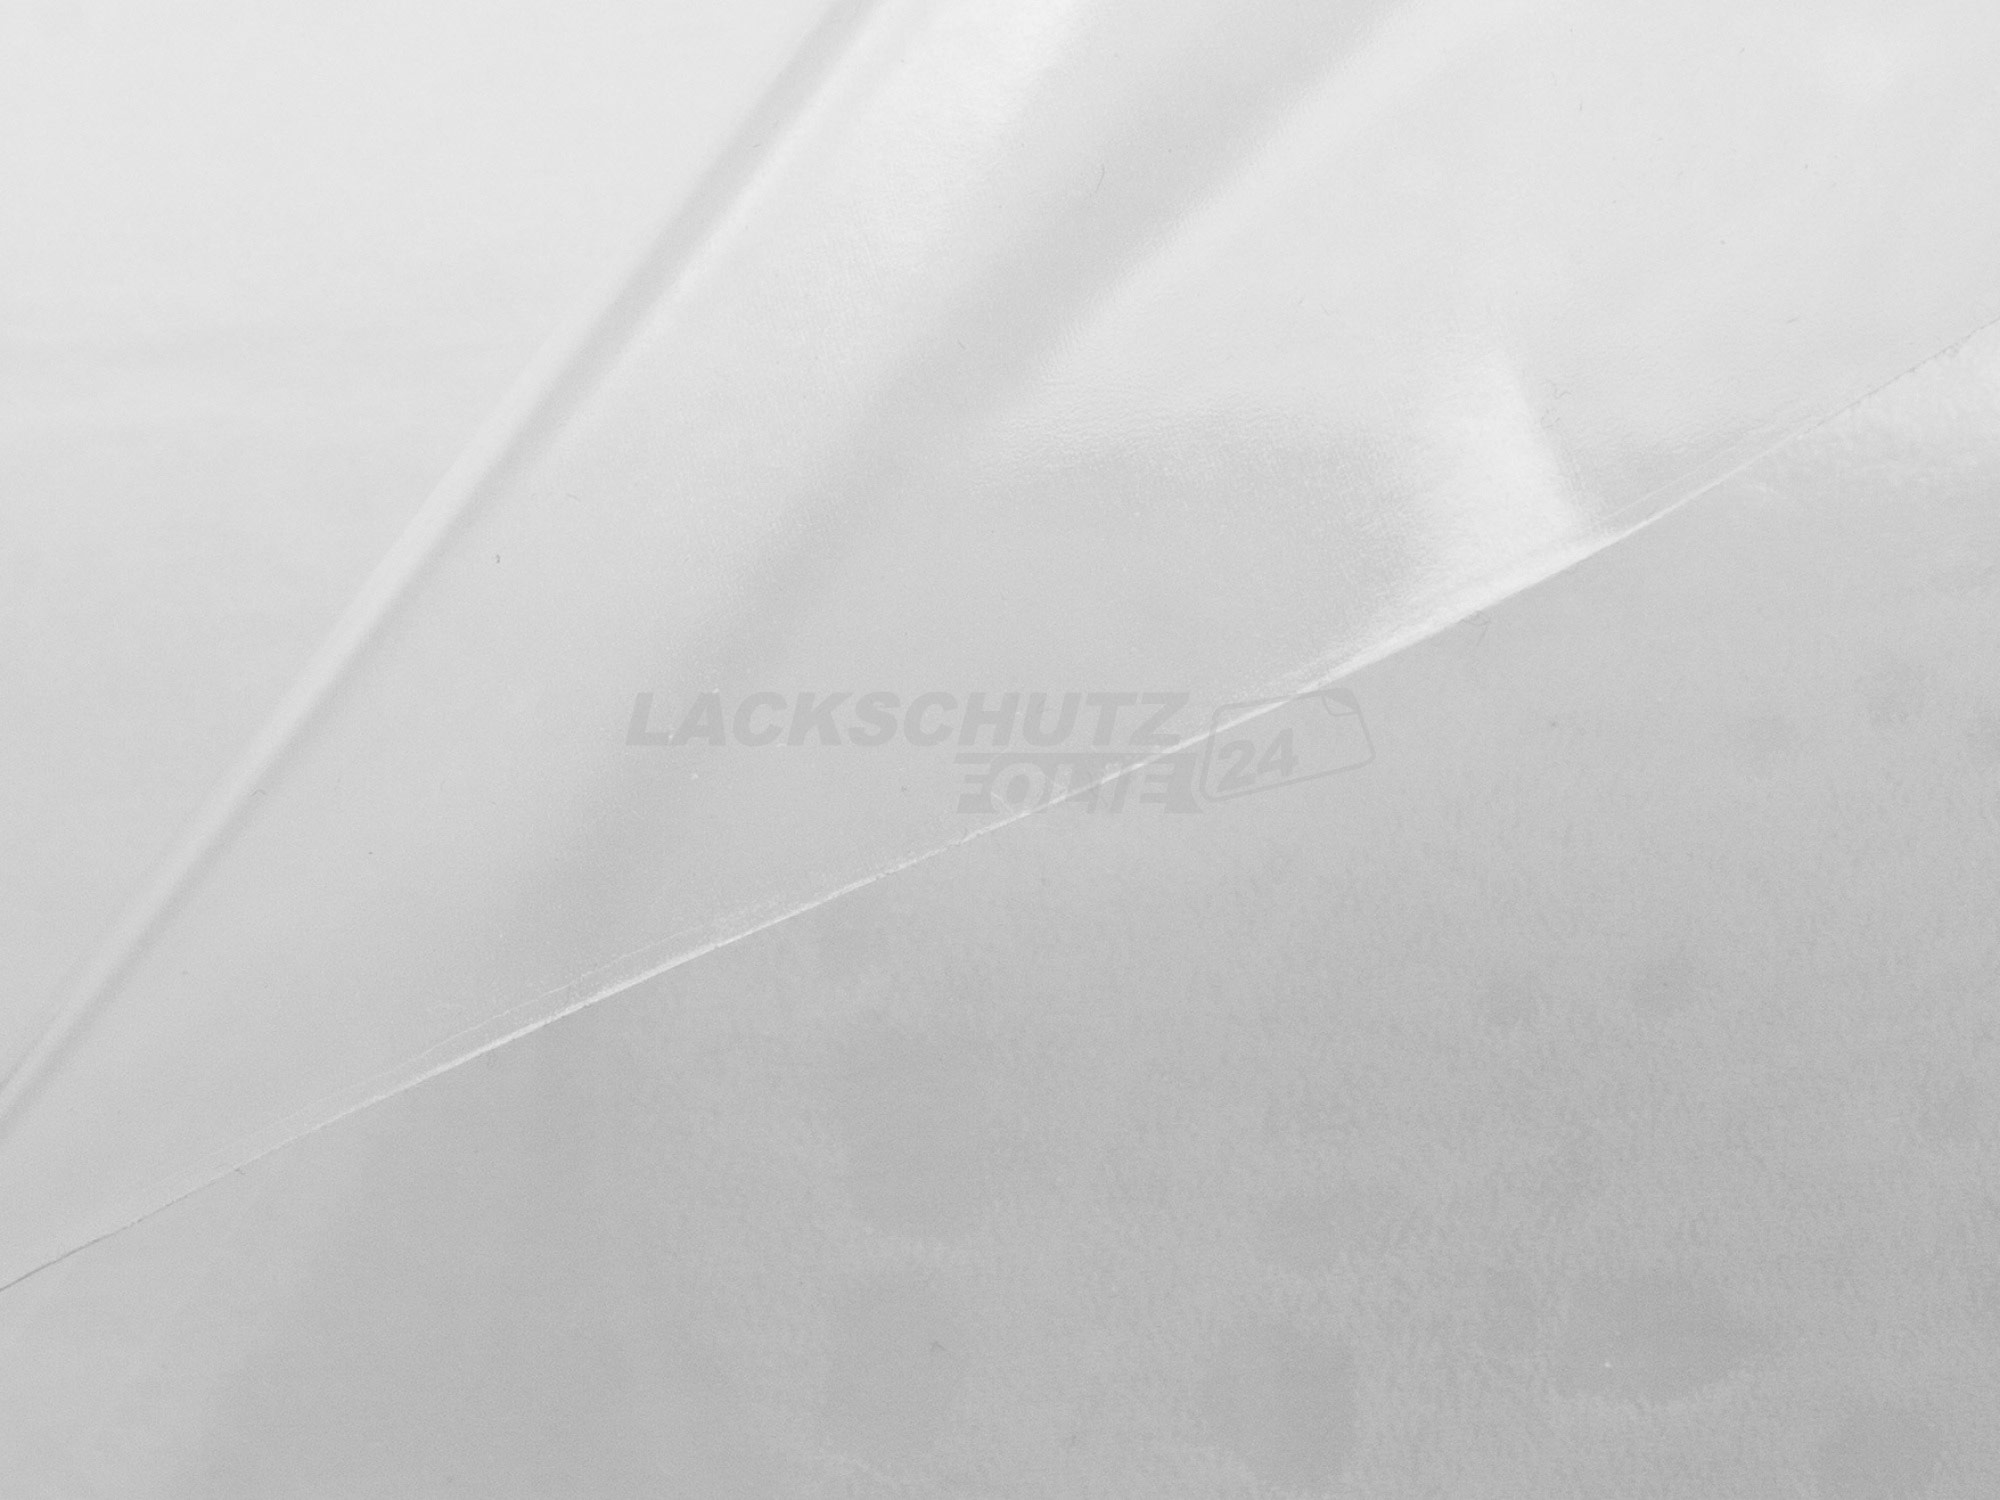 Ladekantenschutzfolie - Transparent Glatt Hochglänzend 150 µm stark für Audi A4 Limousine B7, Typ 8E, ab BJ 2004-2007